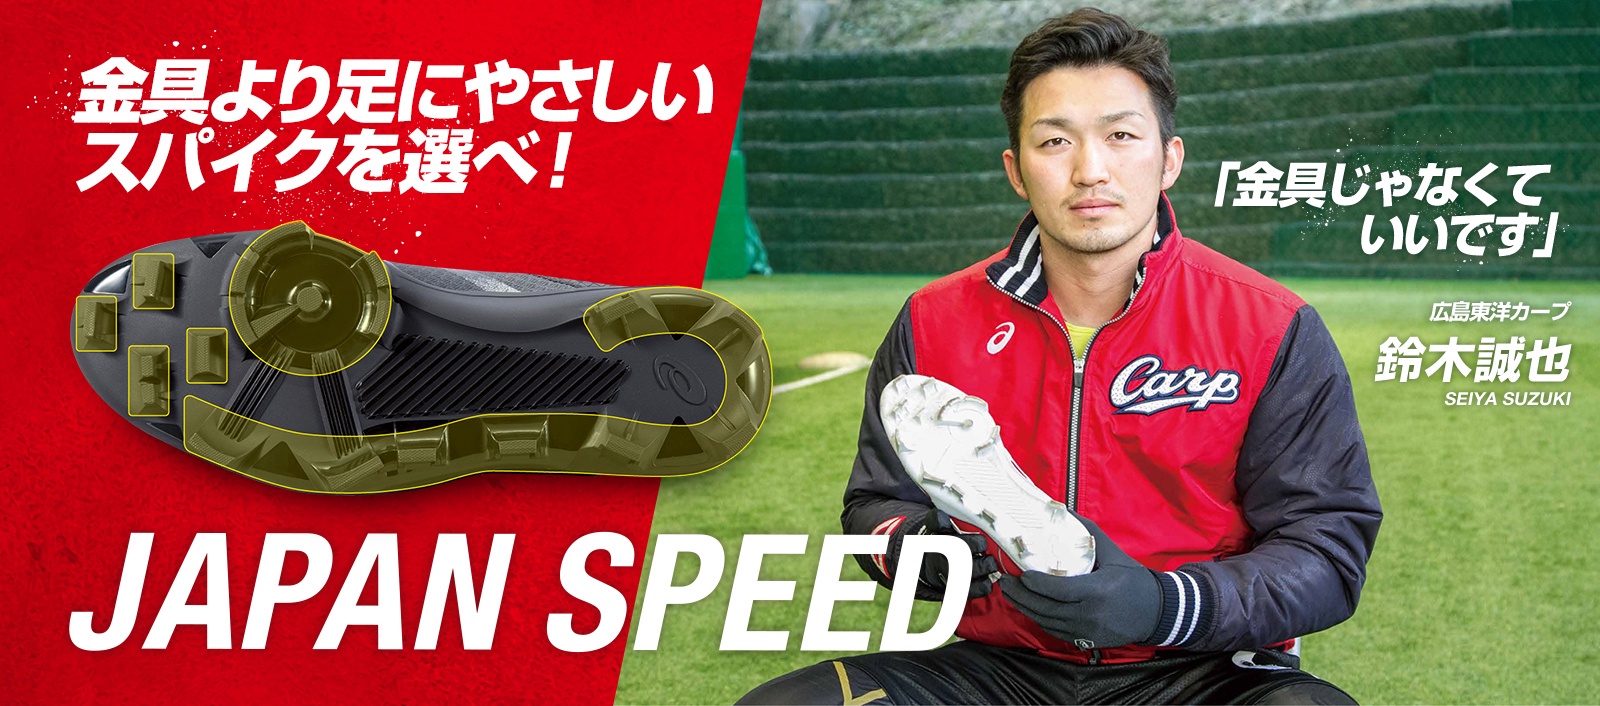 Japan Speed アシックス ベースボール アシックス Japan アシックス Asics